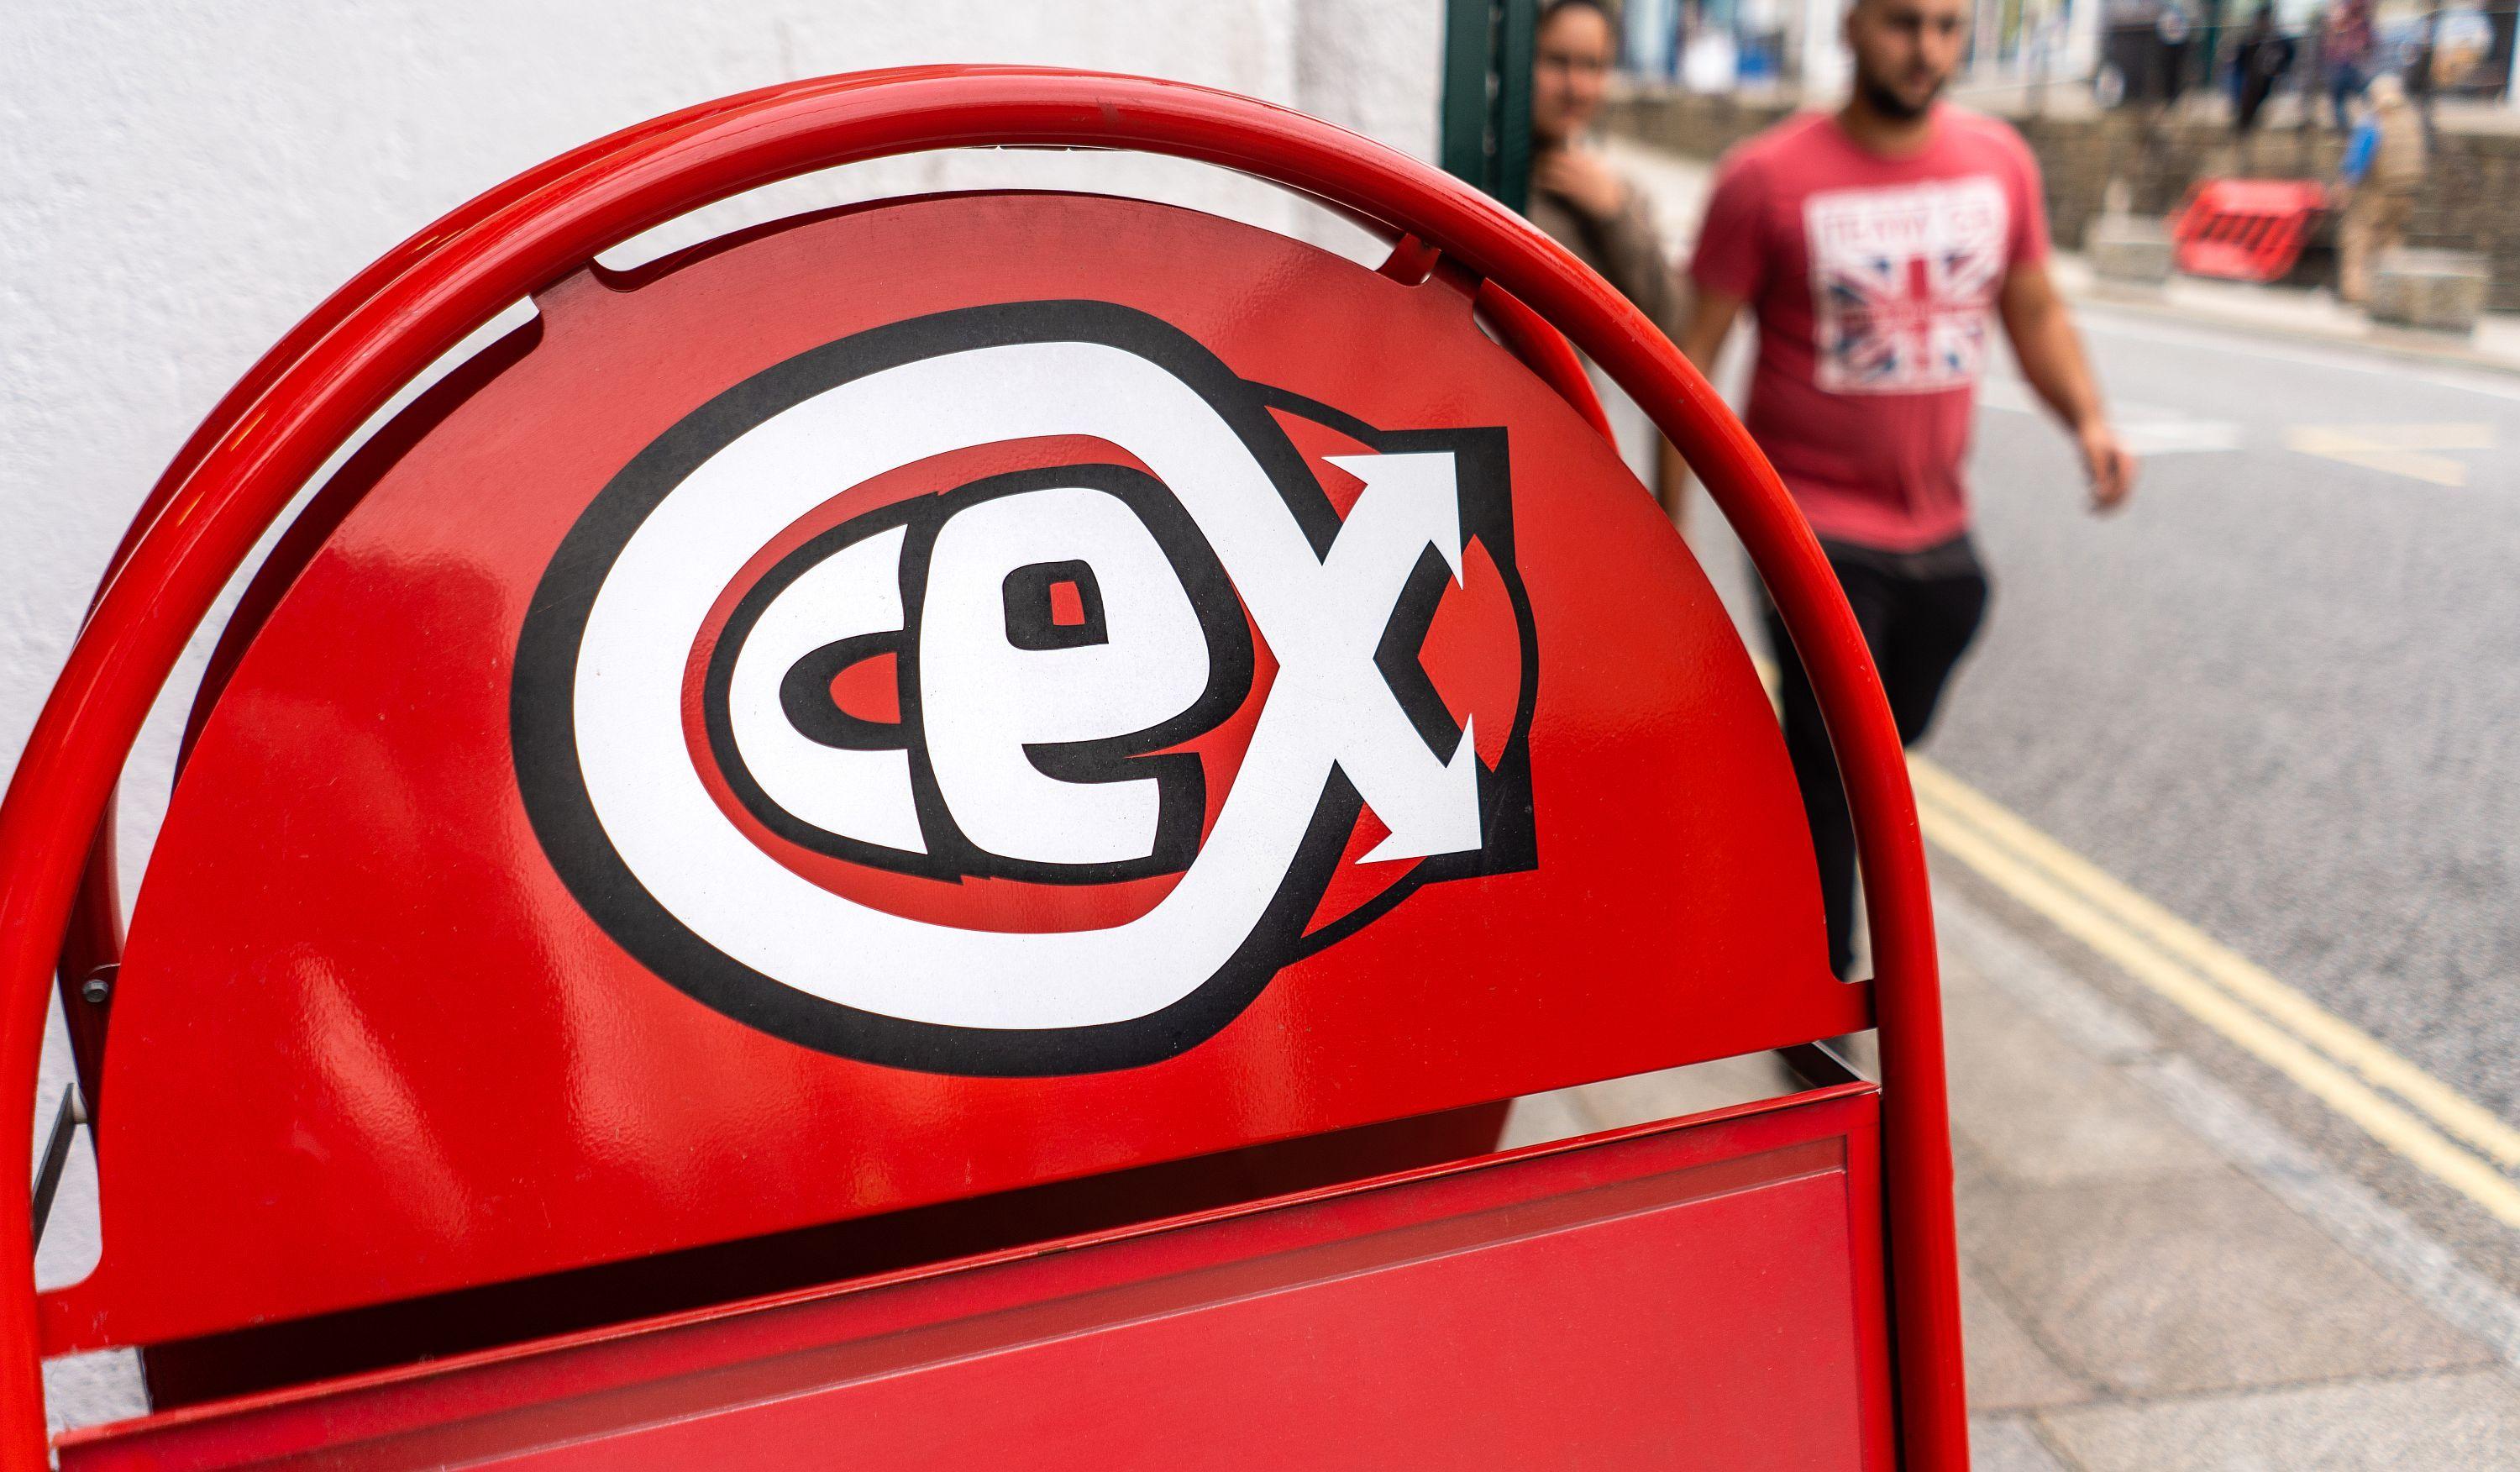 CeX Logo - Start a CeX Franchise - What Franchise